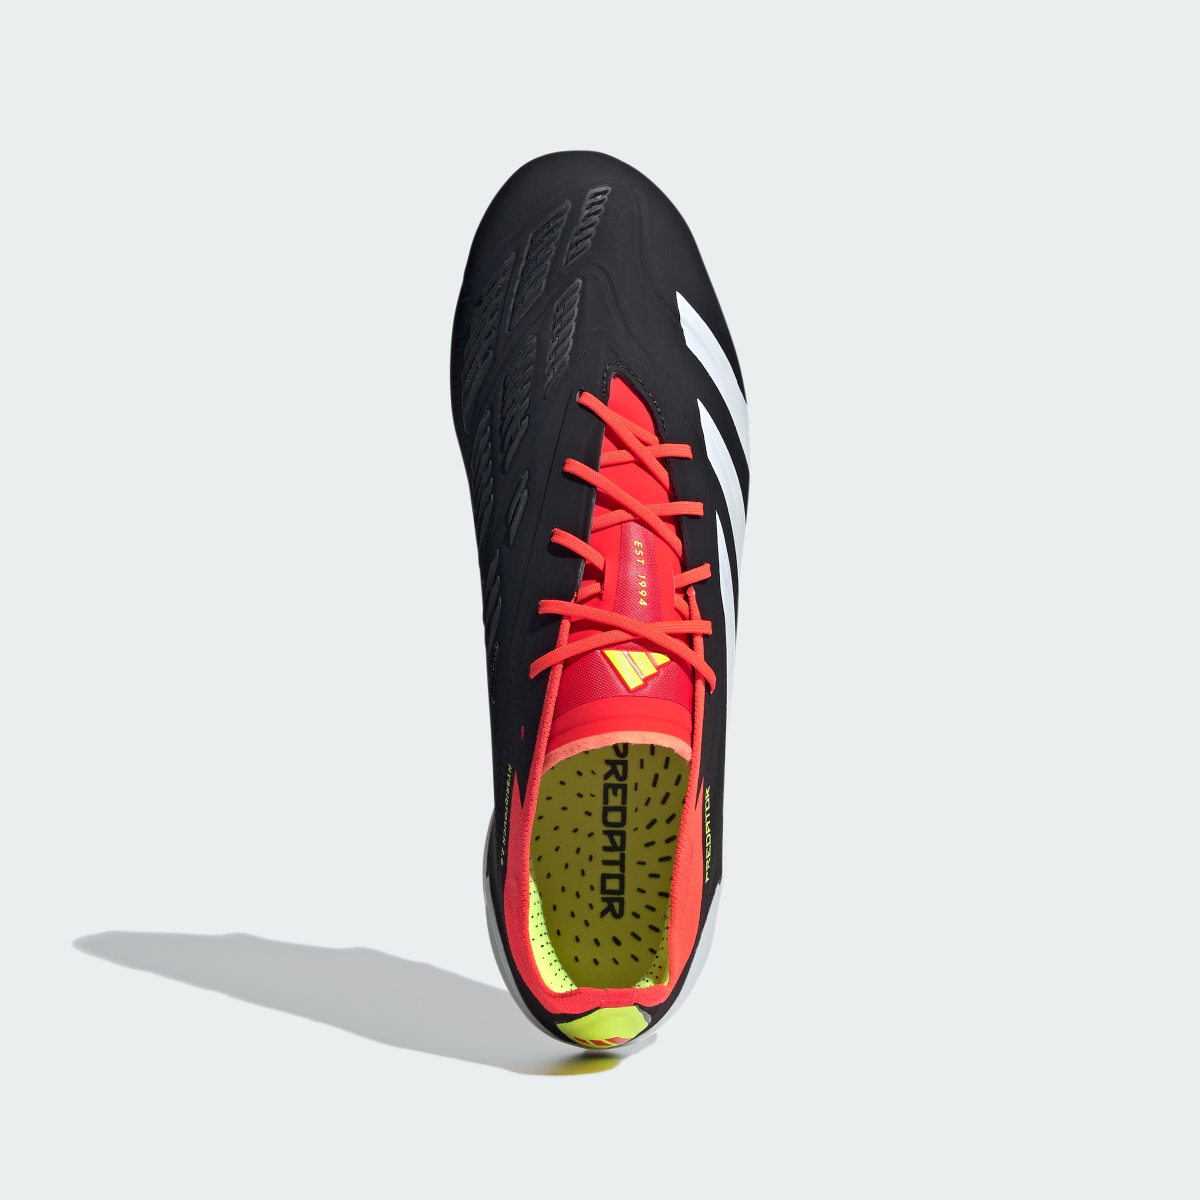 Adidas Predator Elite Soft Ground Football Boots. 6